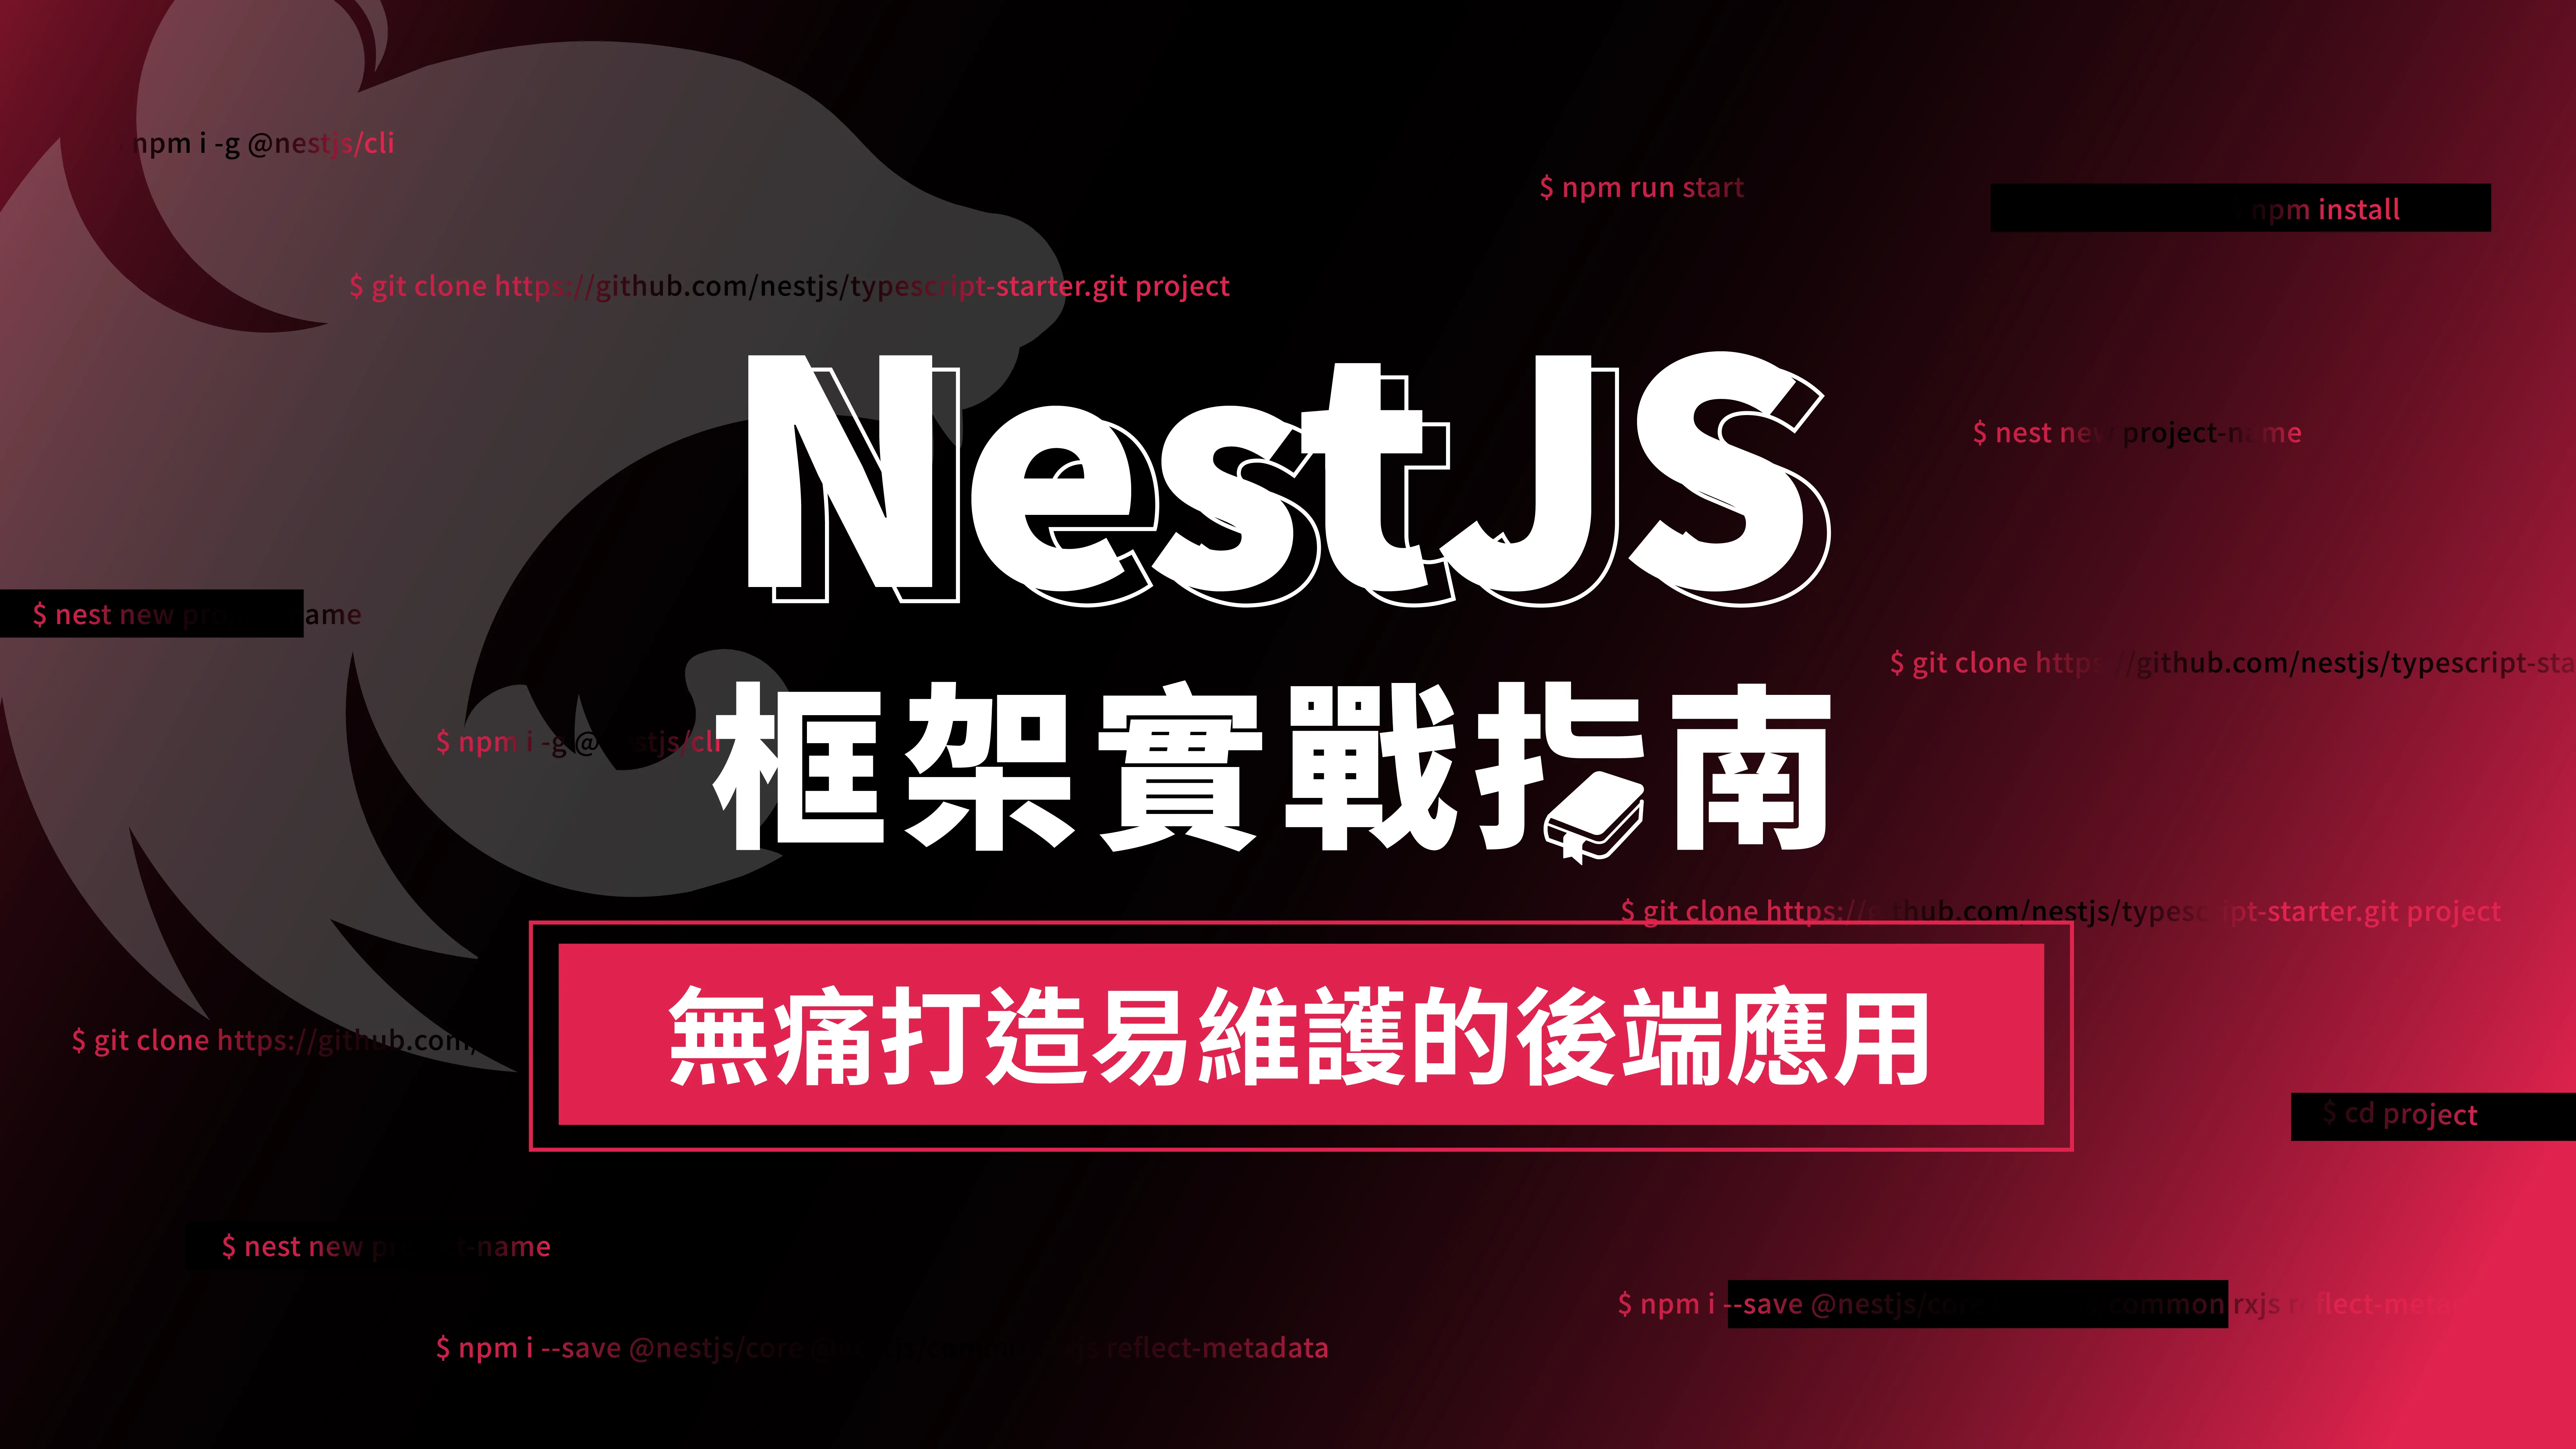 Guards, NestJS 中文文档